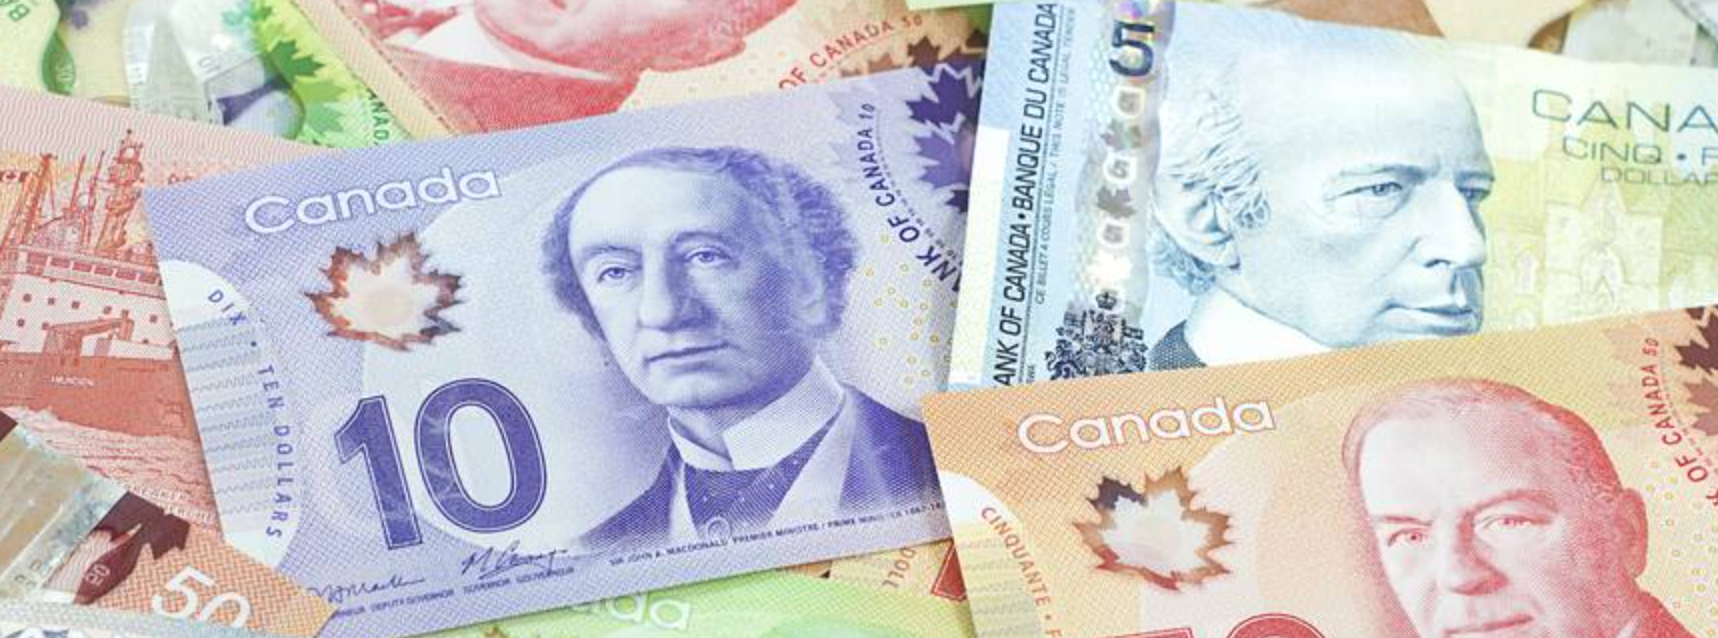 Lý do đồng Dollar Canada rớt giá